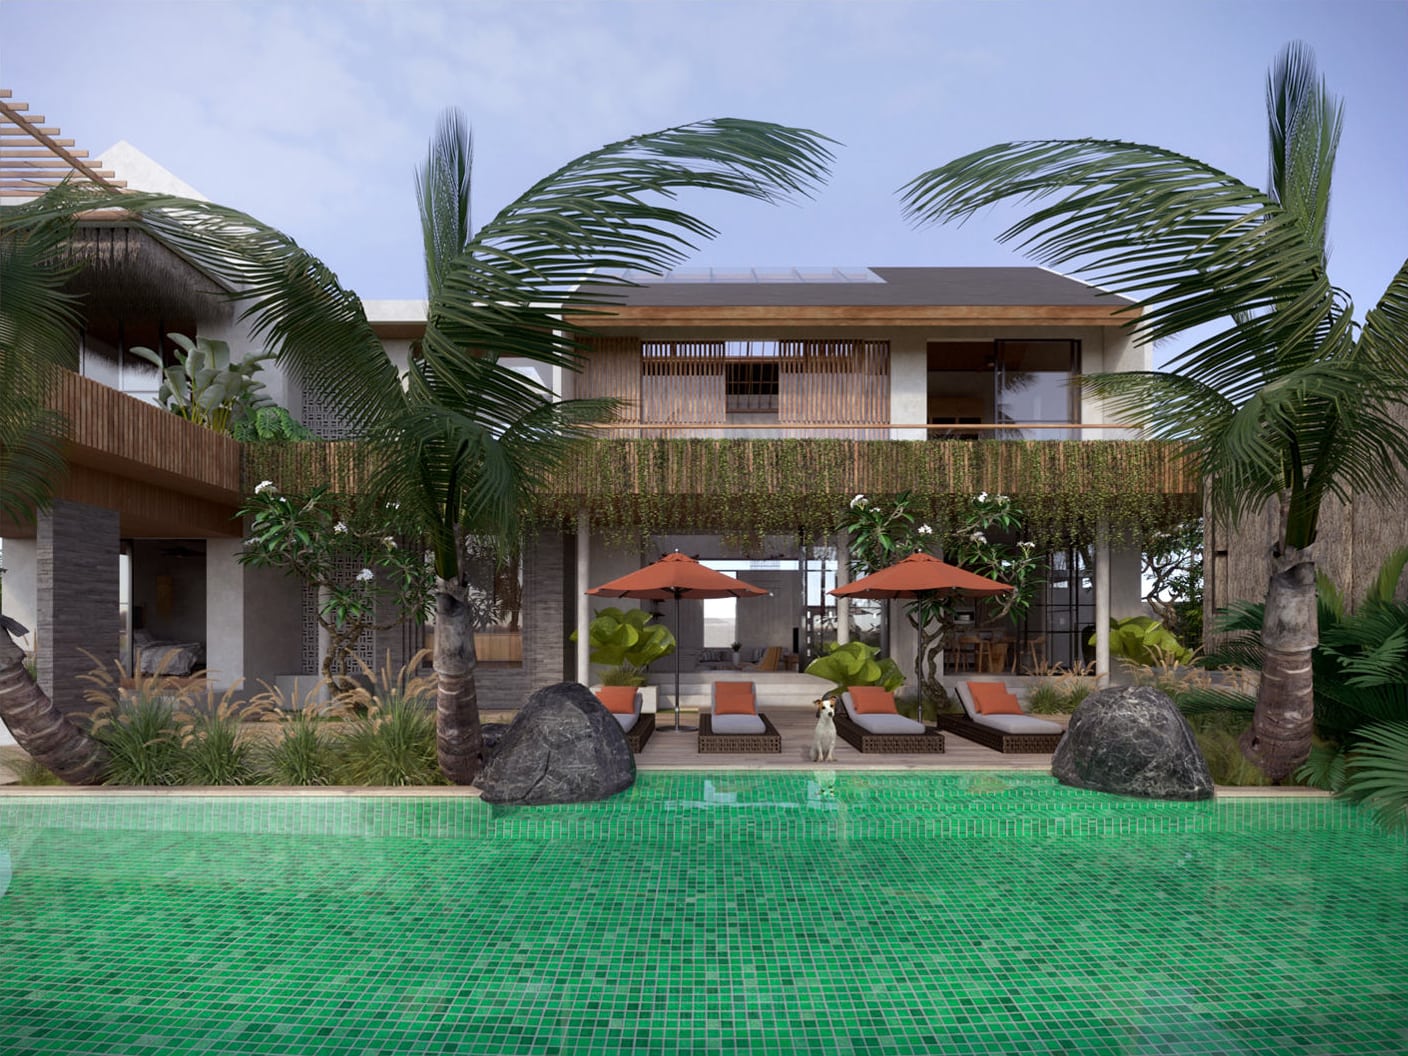 Modern Balinese Design - Bali Architect - Balitecture